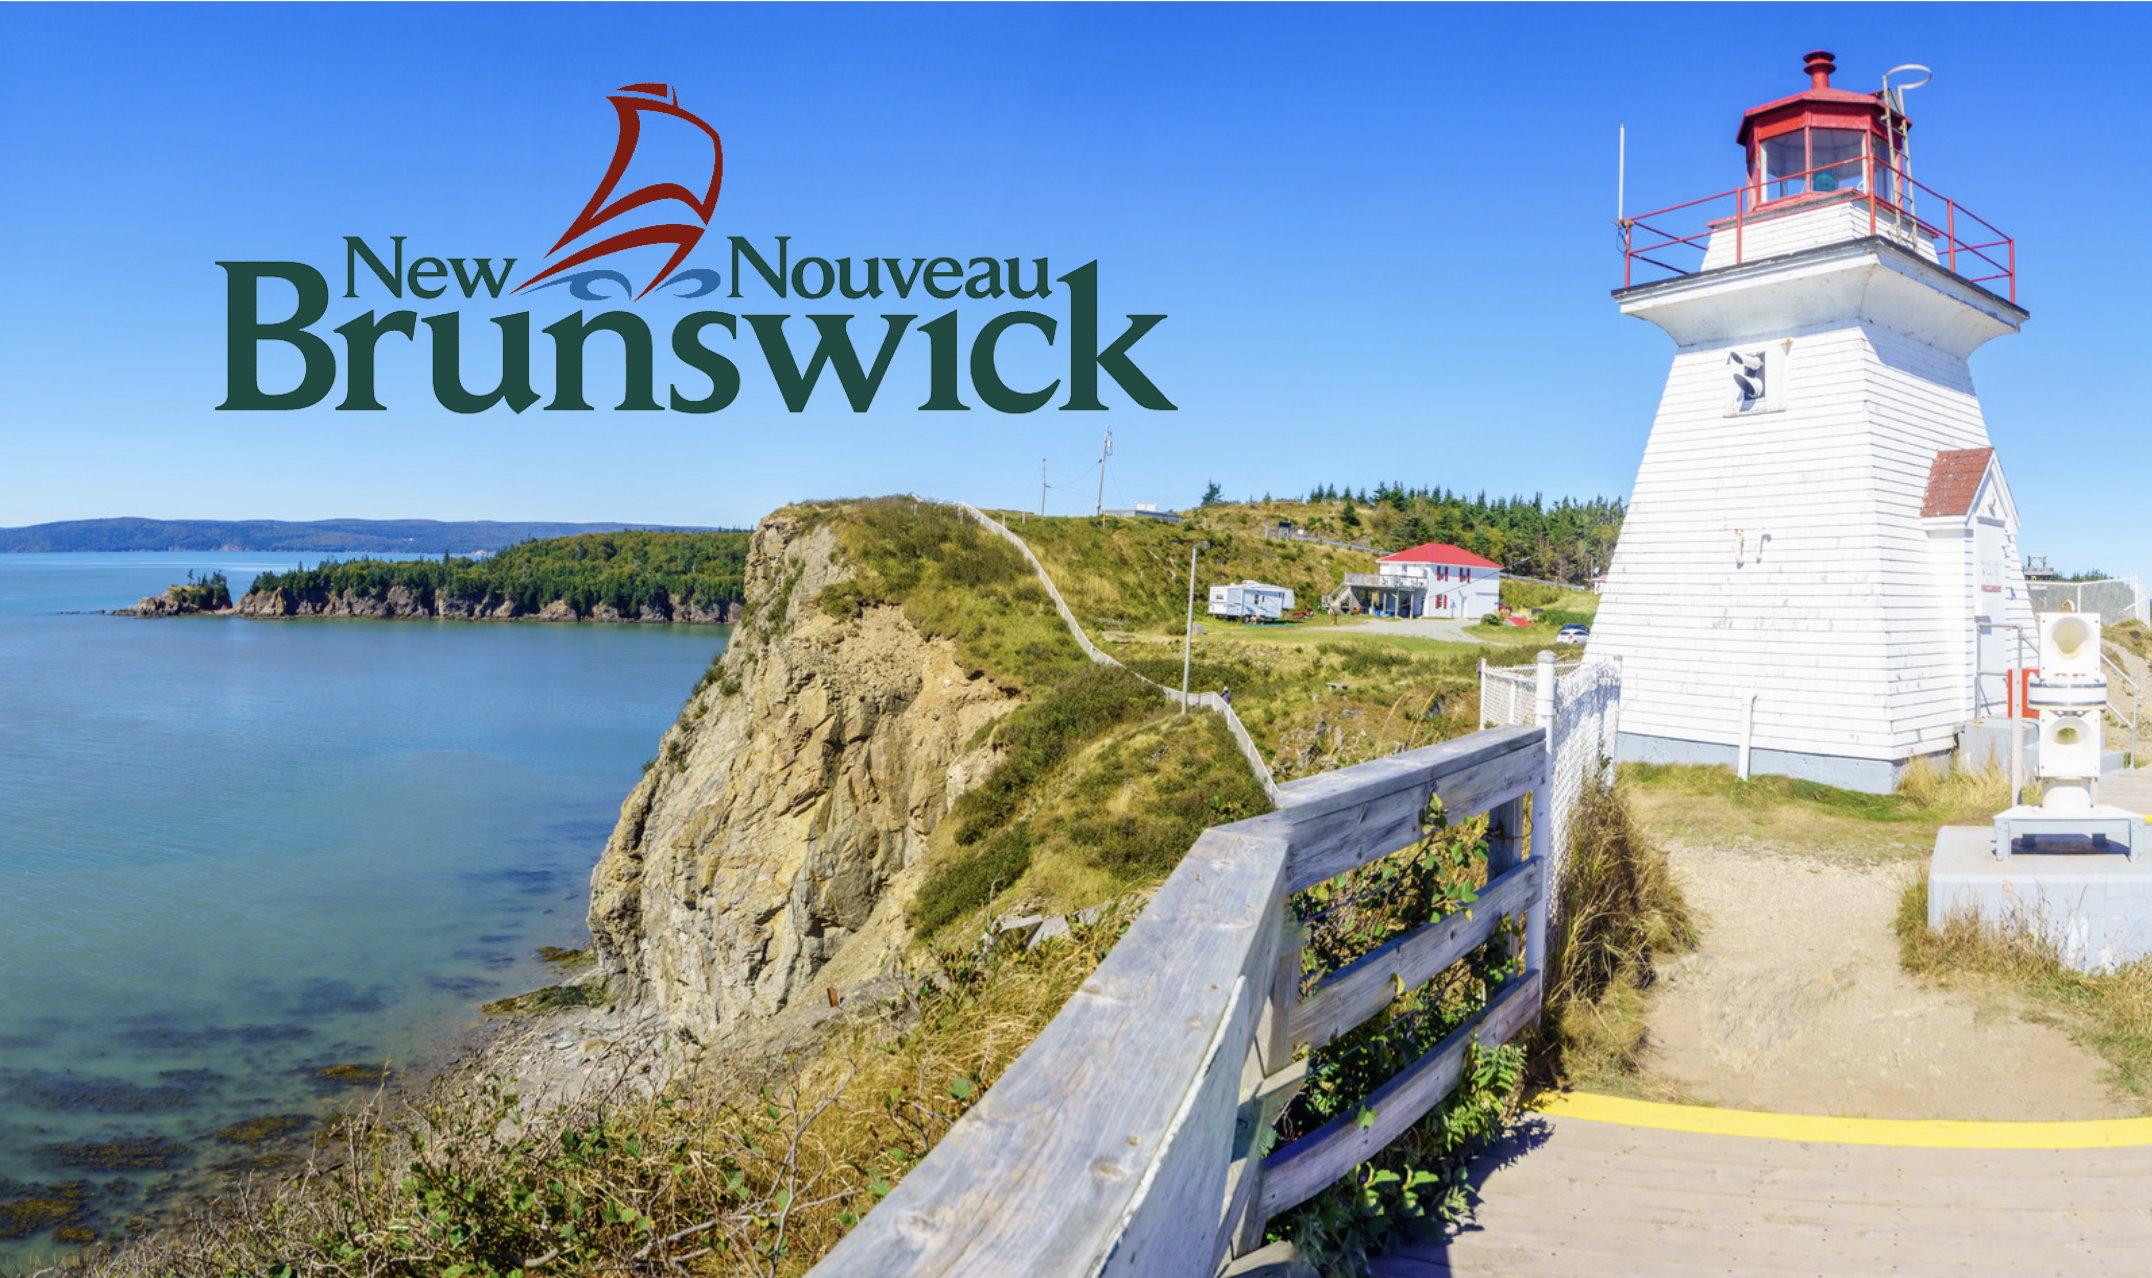 Ao sabor das marés: New Brunswick, no Canadá - Jornal O Globo